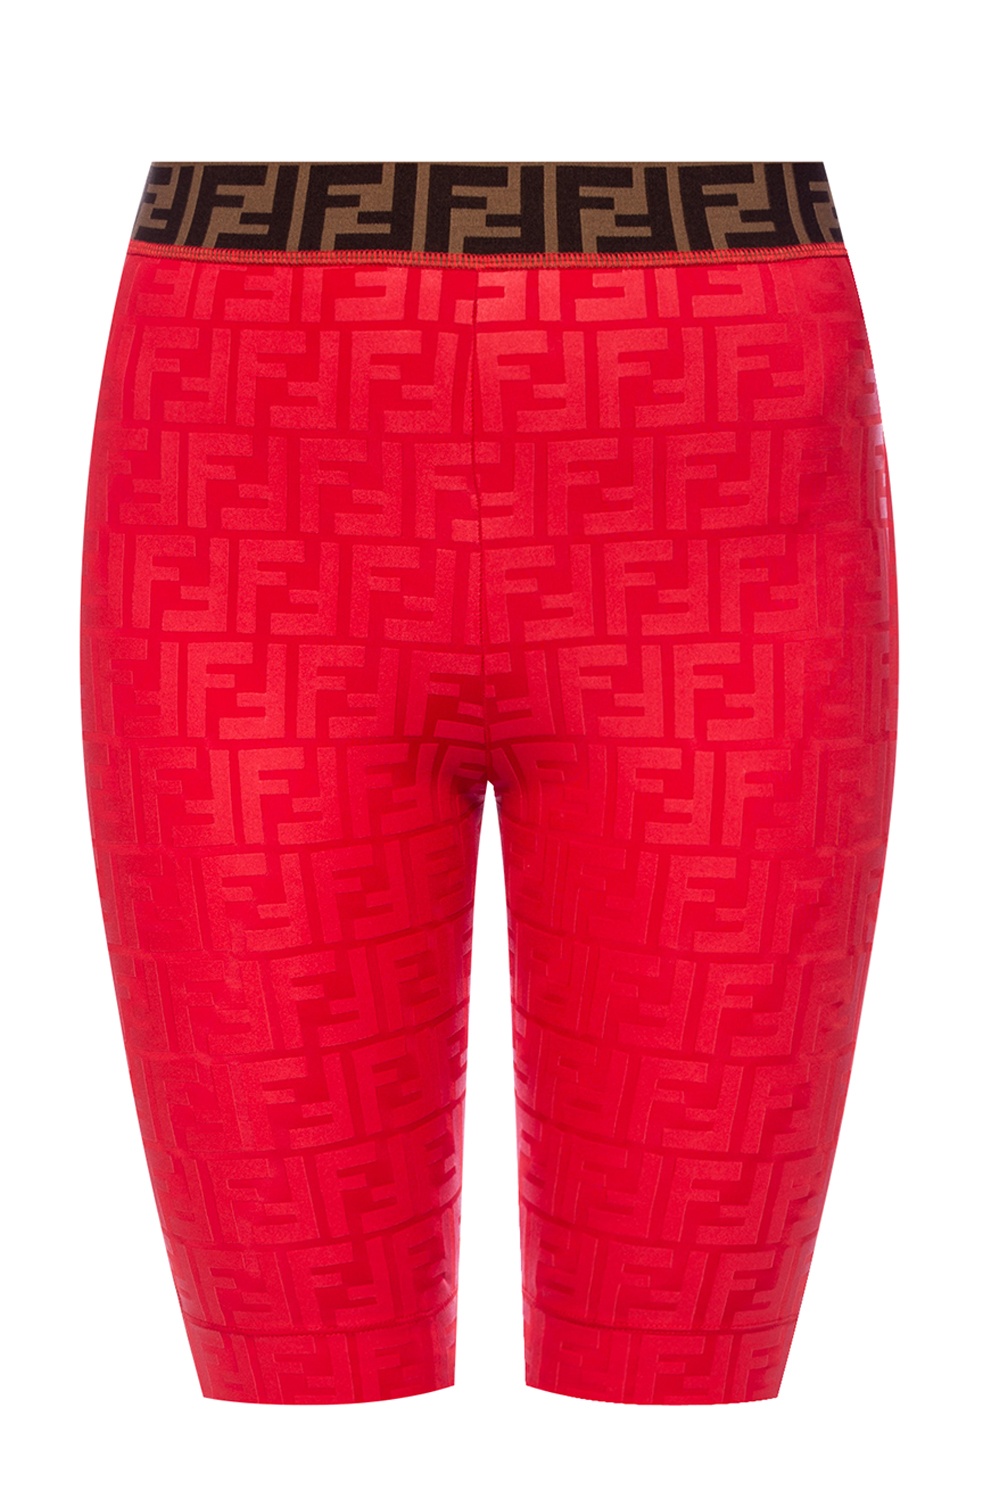 fendi tights red